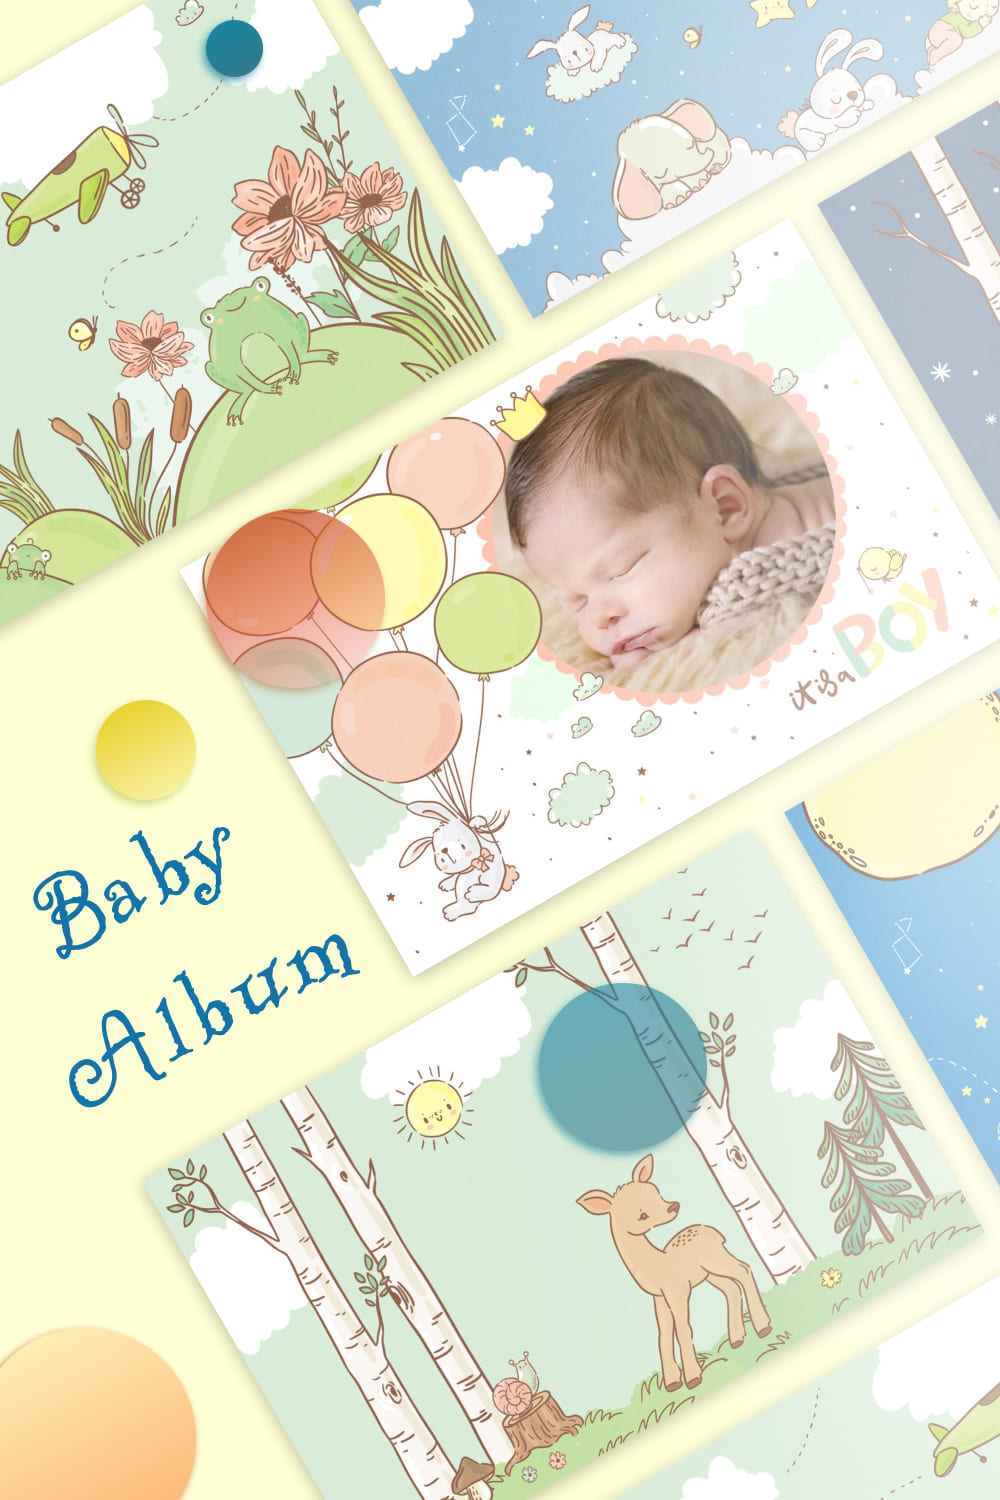 Baby Album illustration - Pinterest Image Preview.